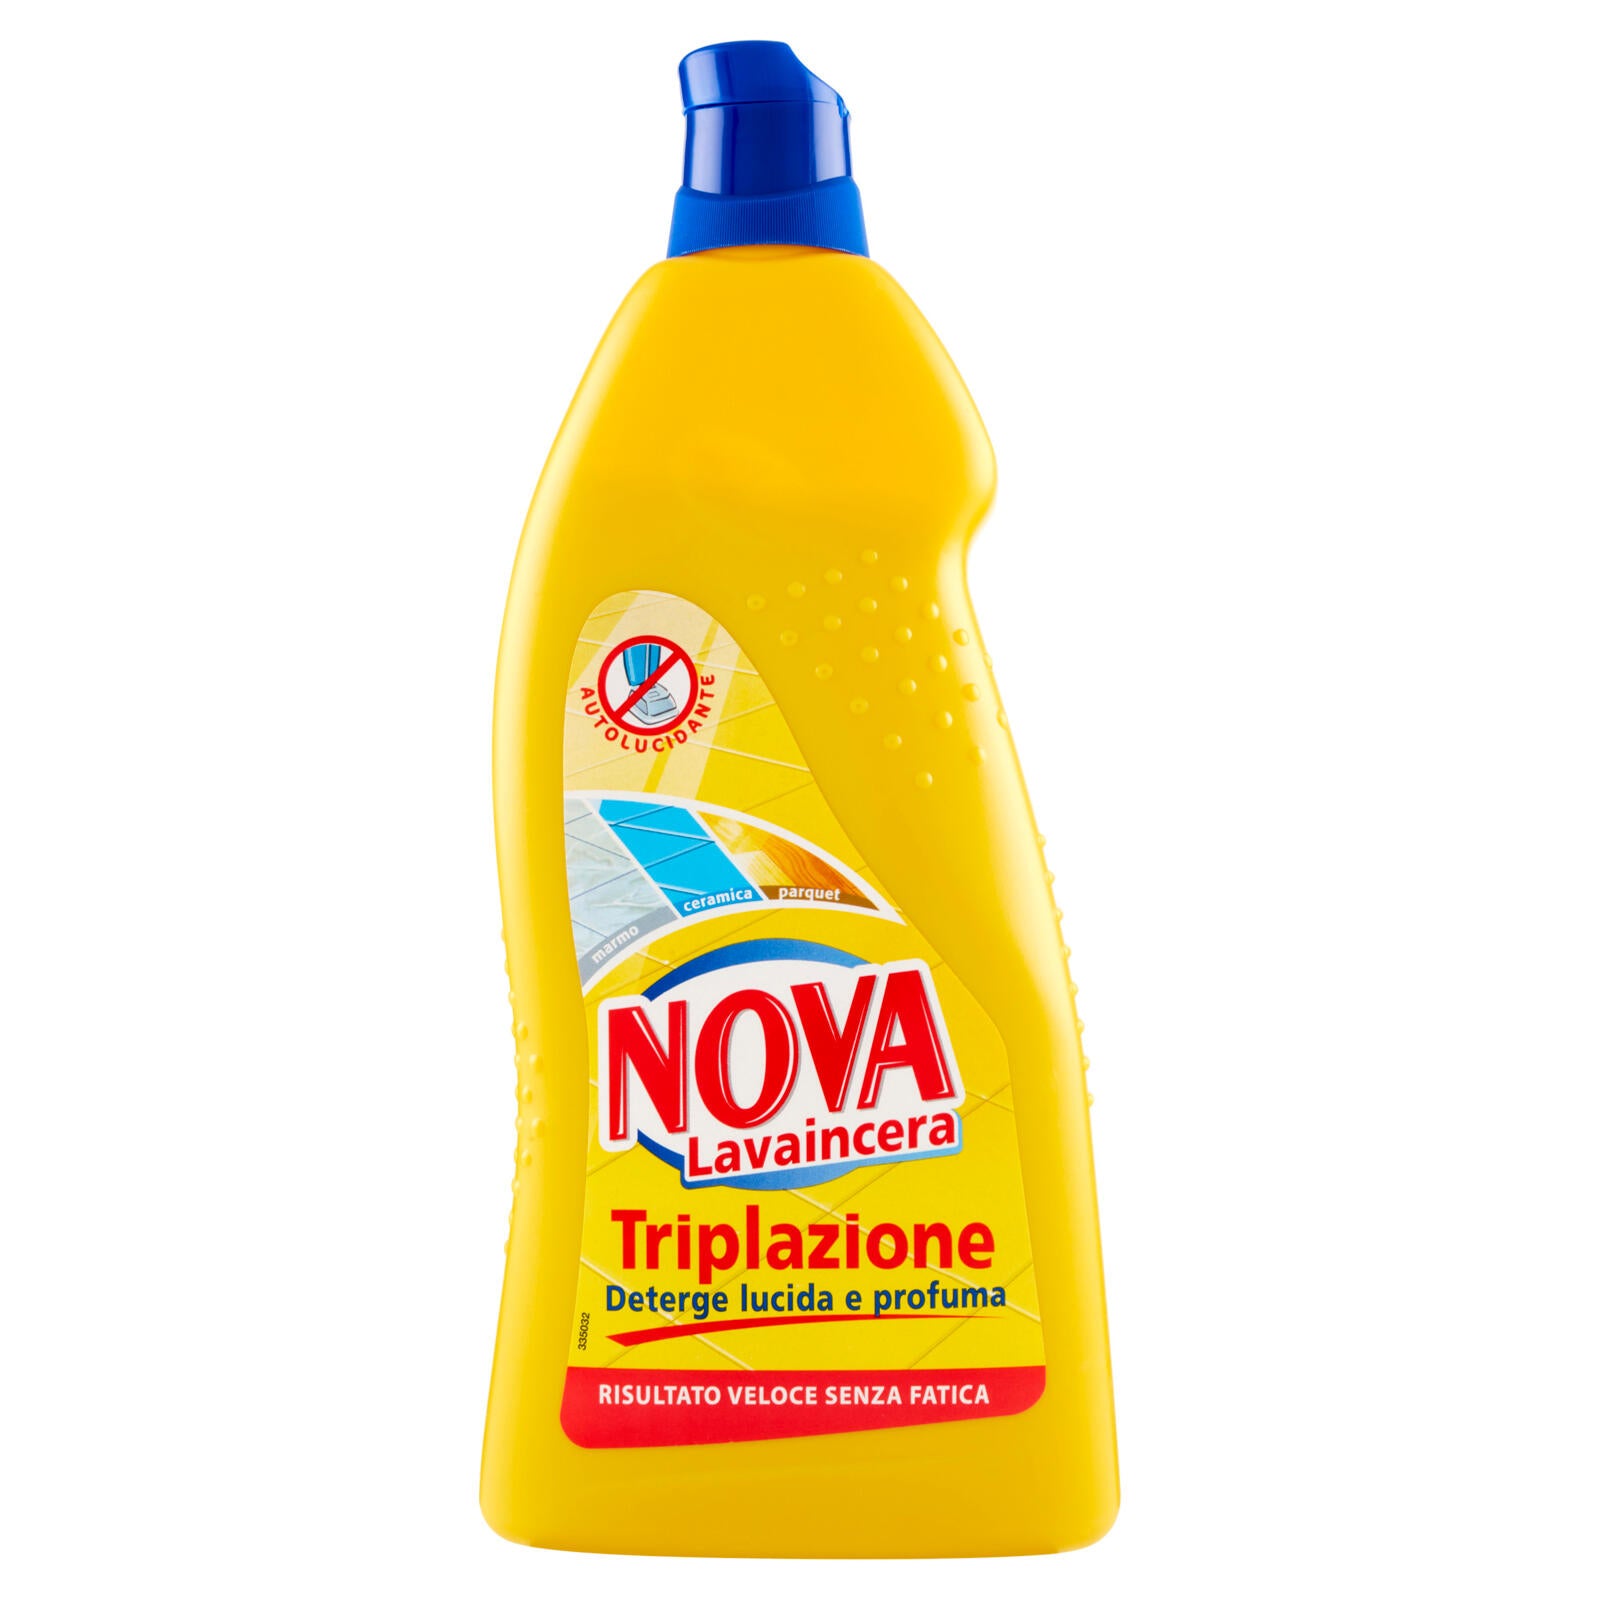 Nova Lavaincera Triplazione 900 ml